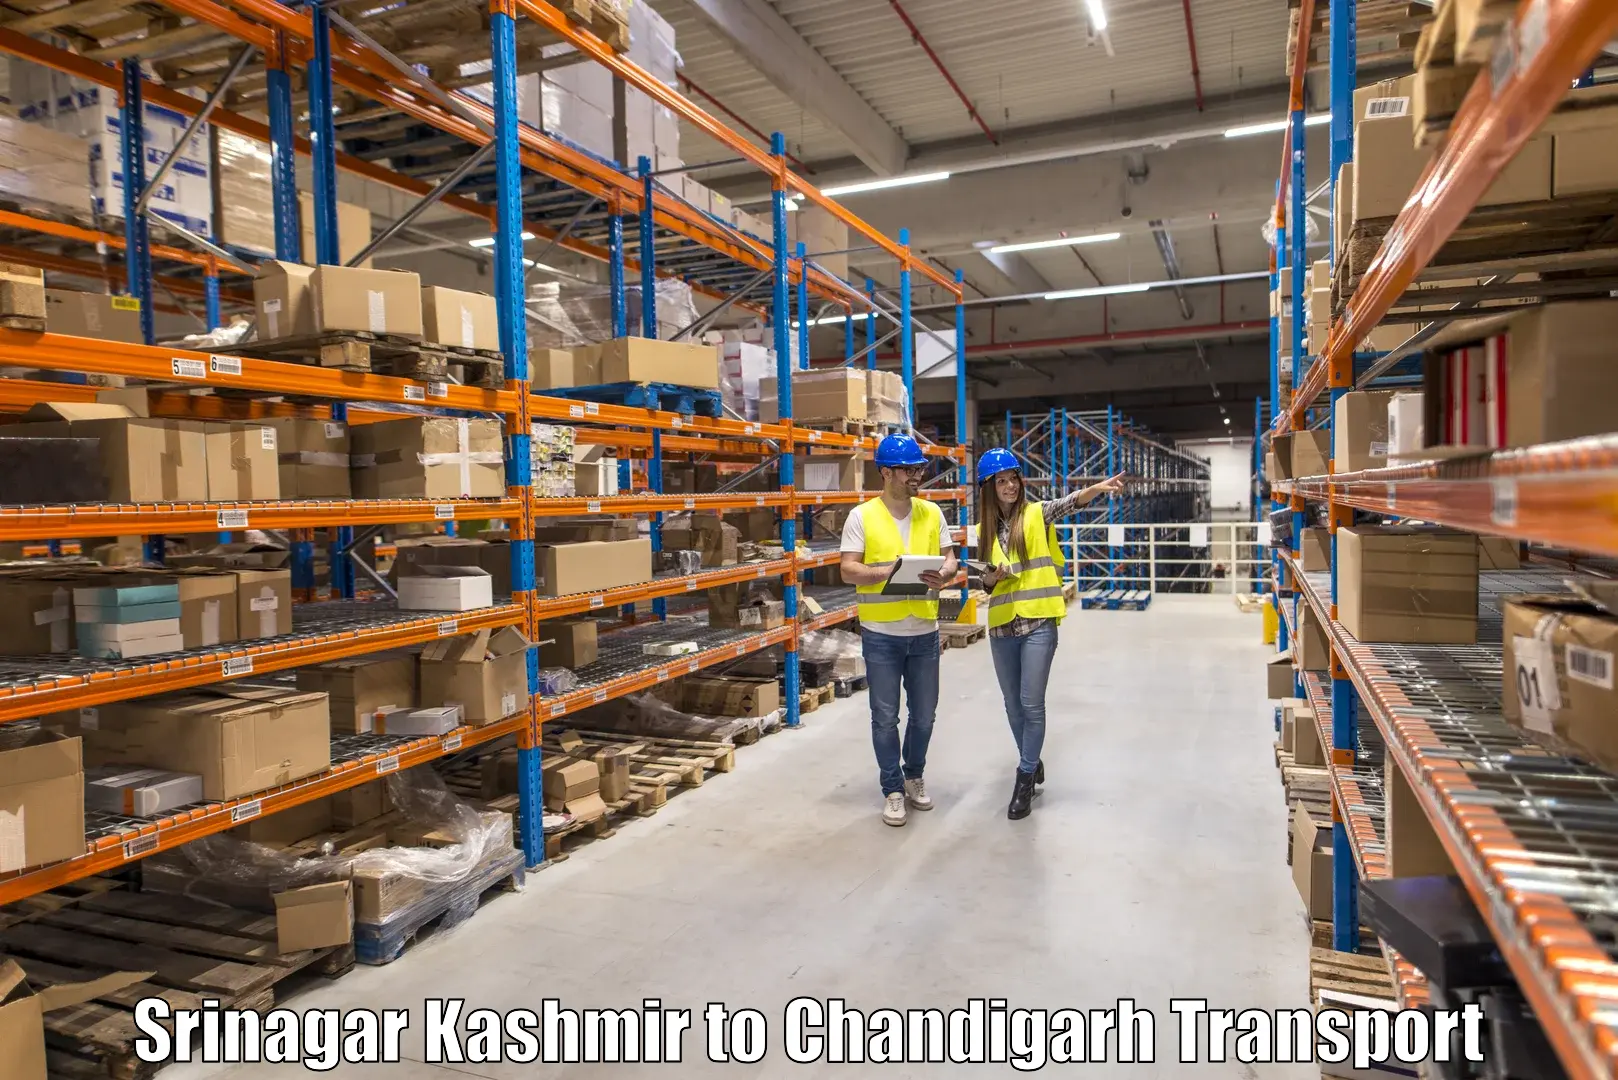 Furniture transport service Srinagar Kashmir to Chandigarh